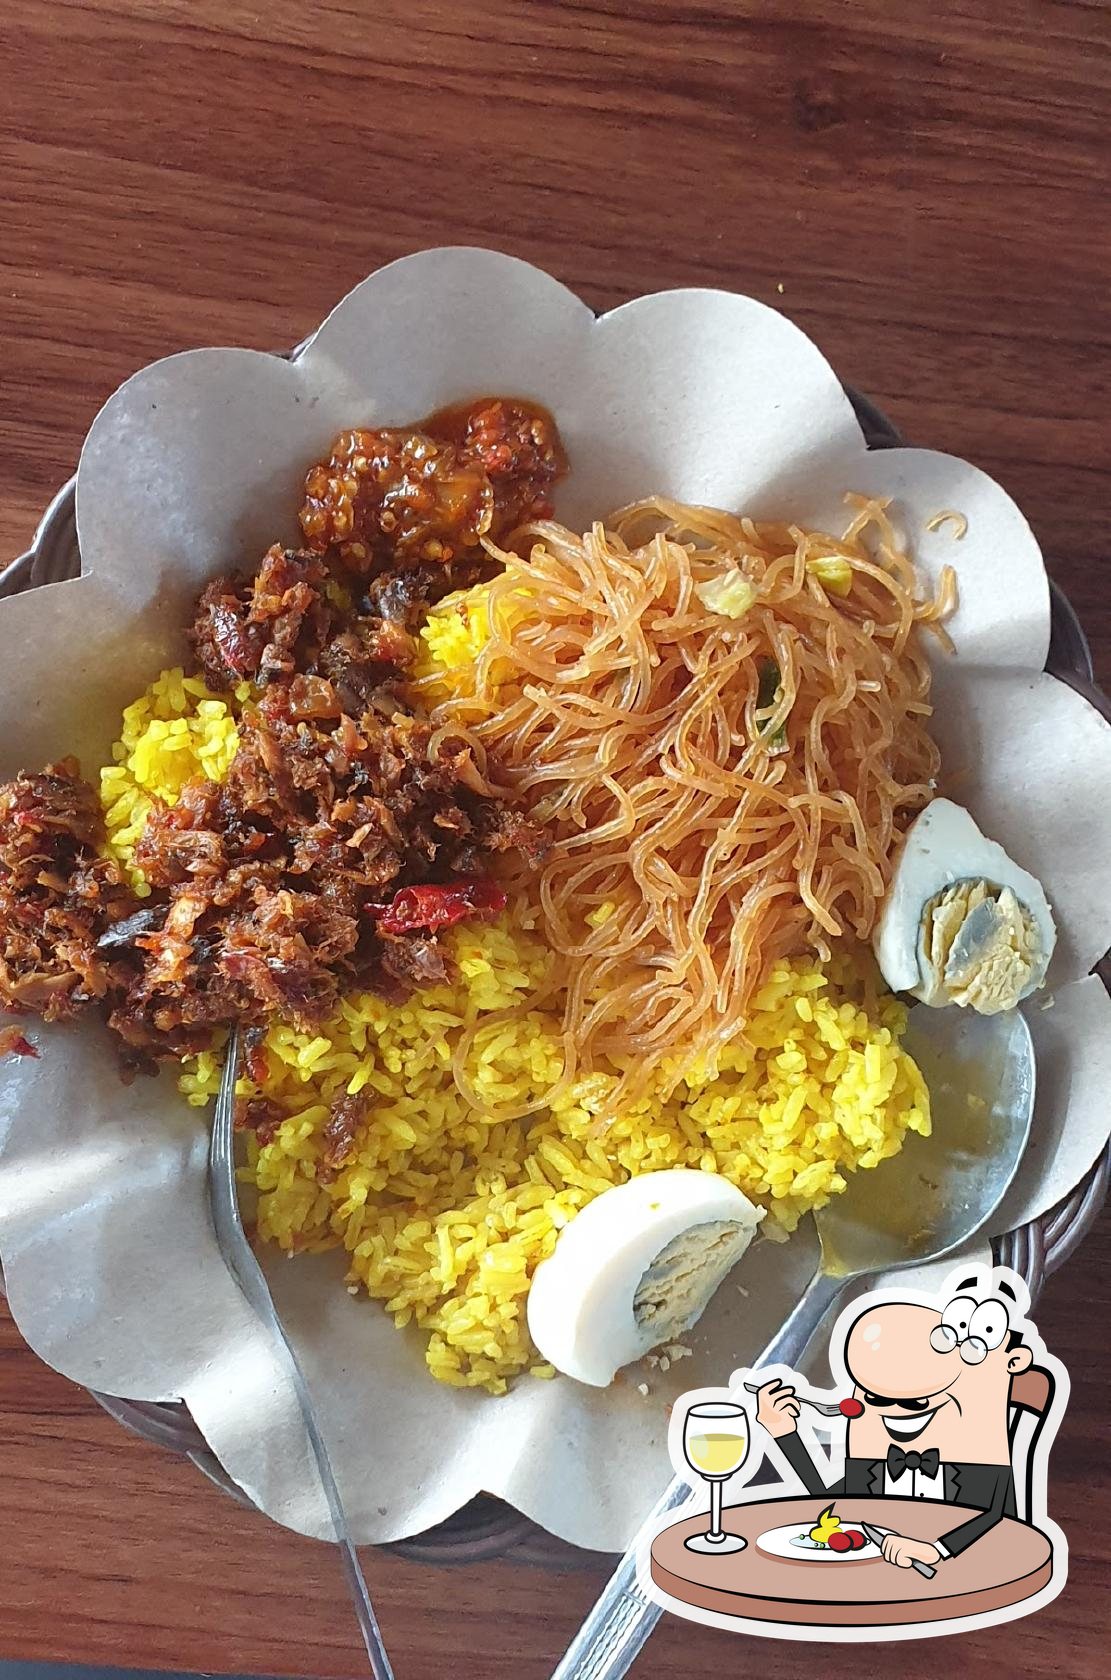 Rumah Makan Simpang Tiga restaurant, Makassar - Restaurant reviews